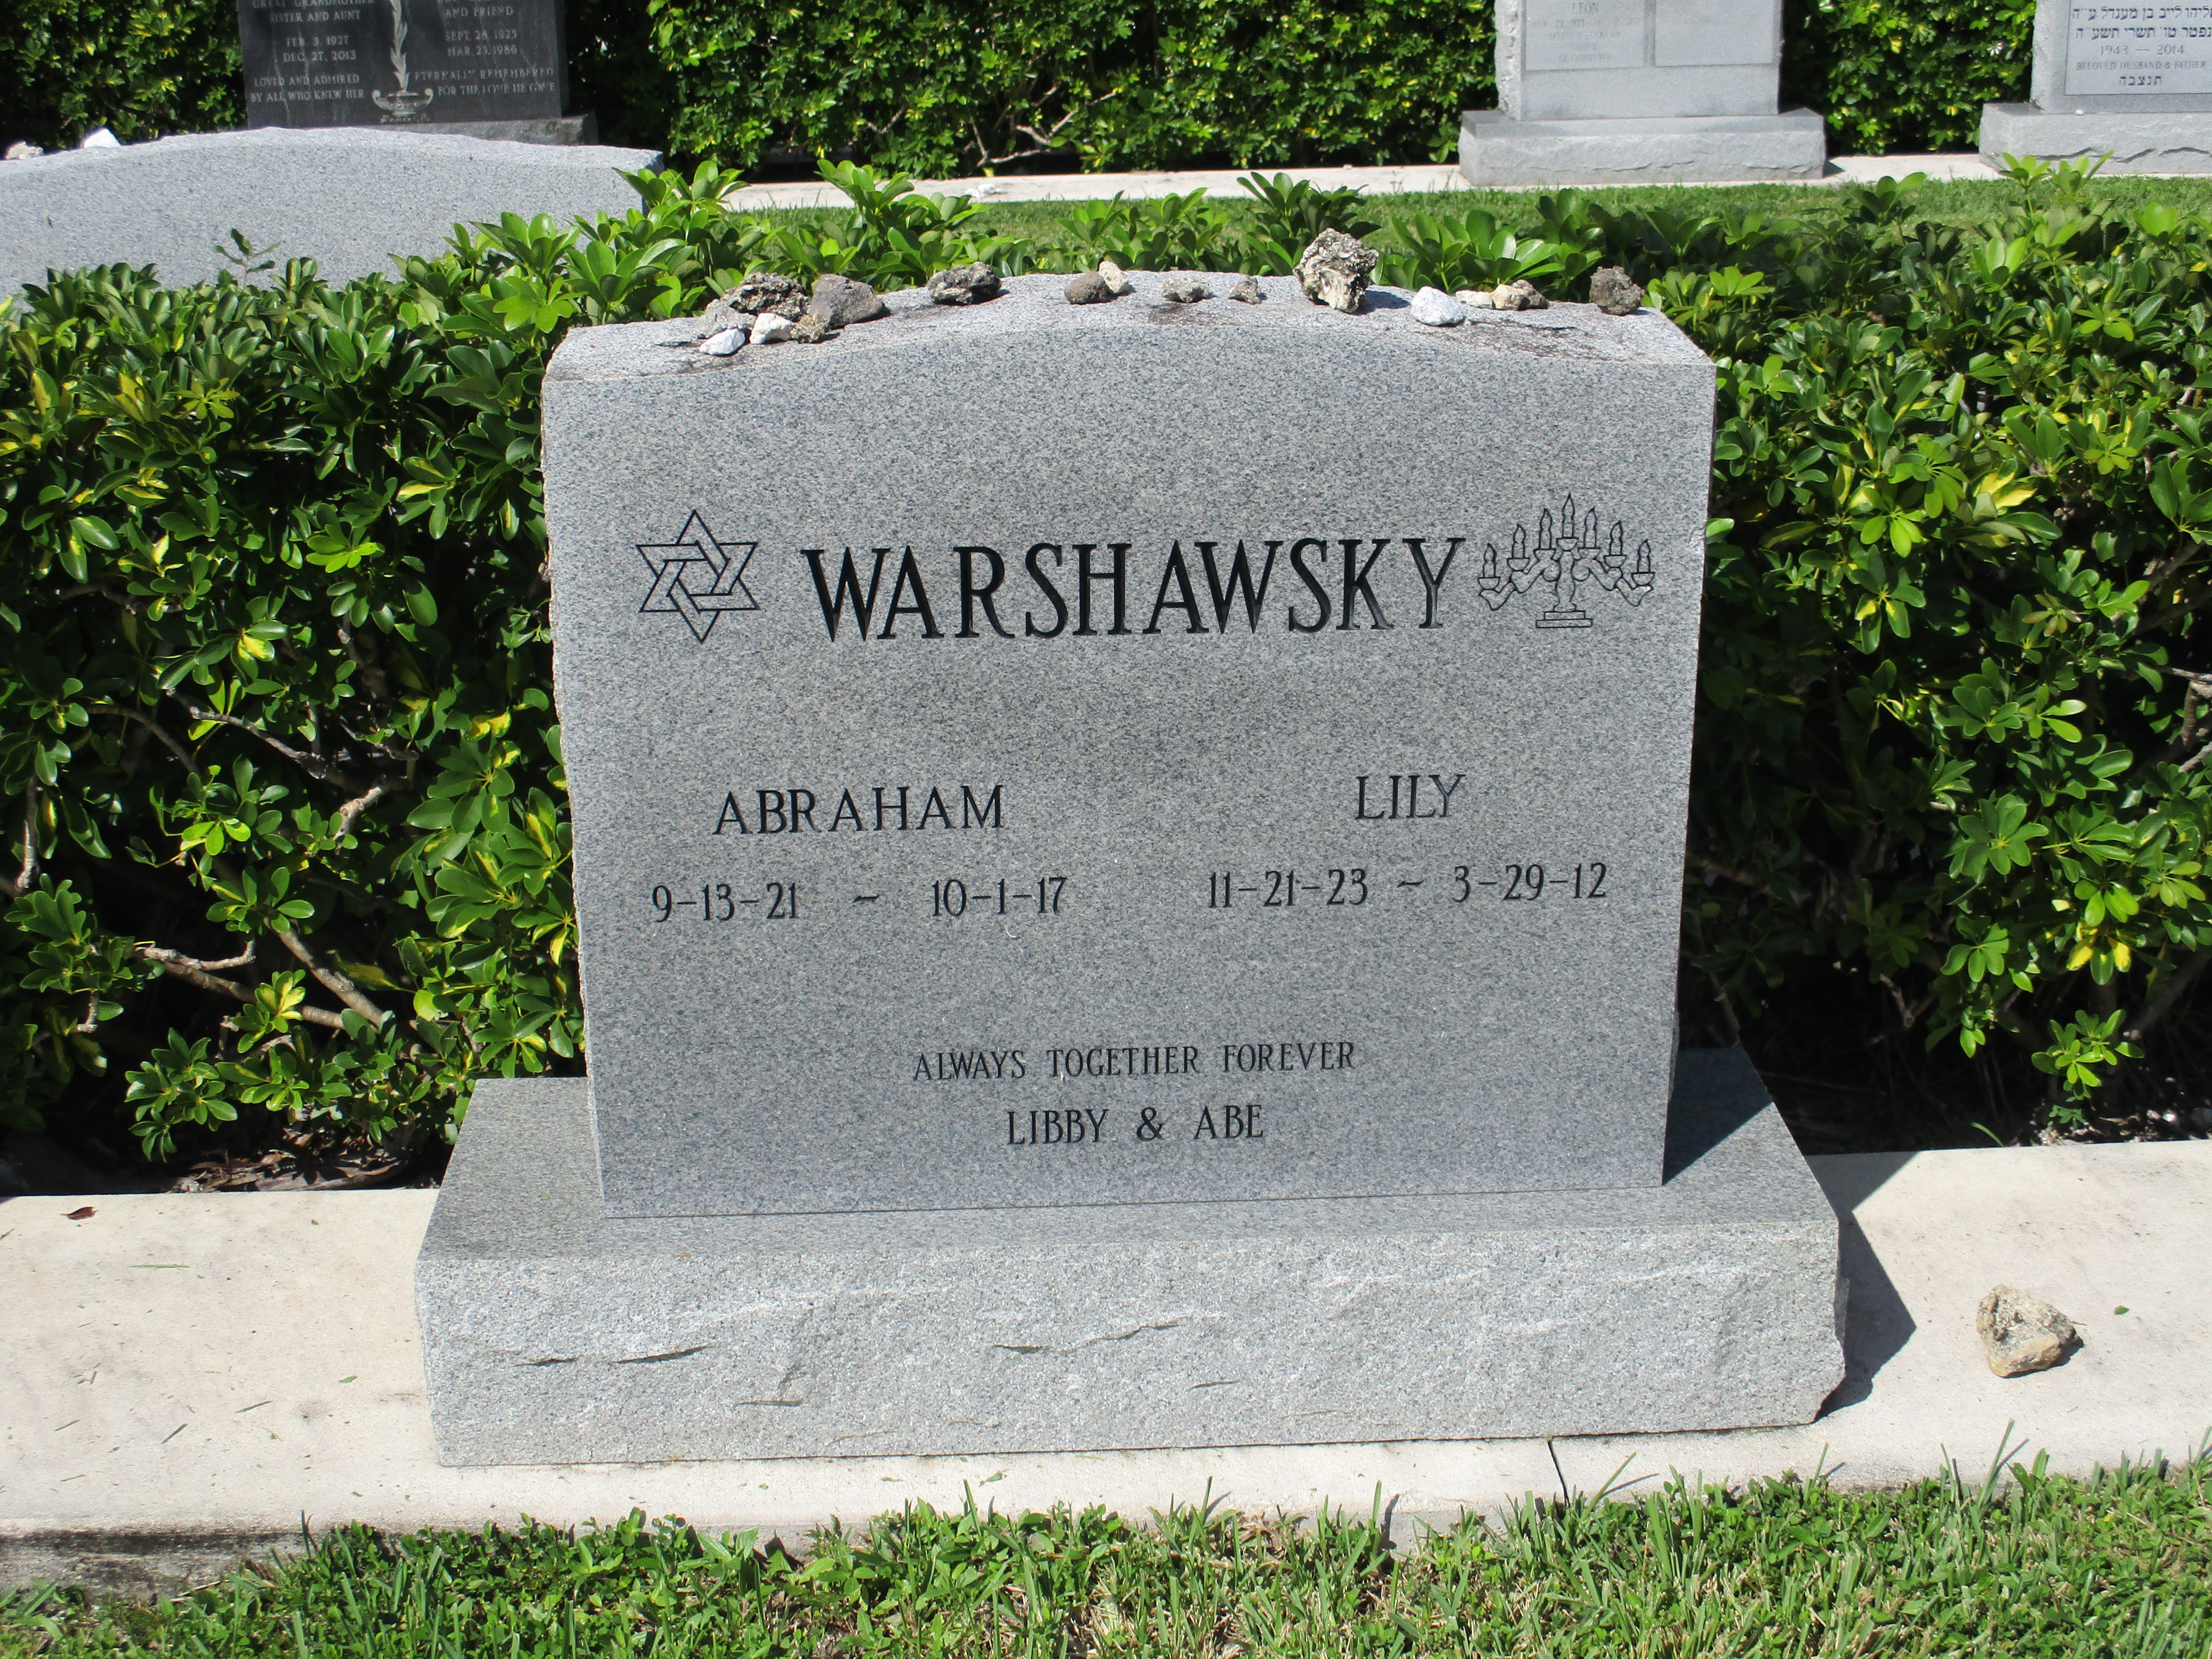 Abraham Warshawsky